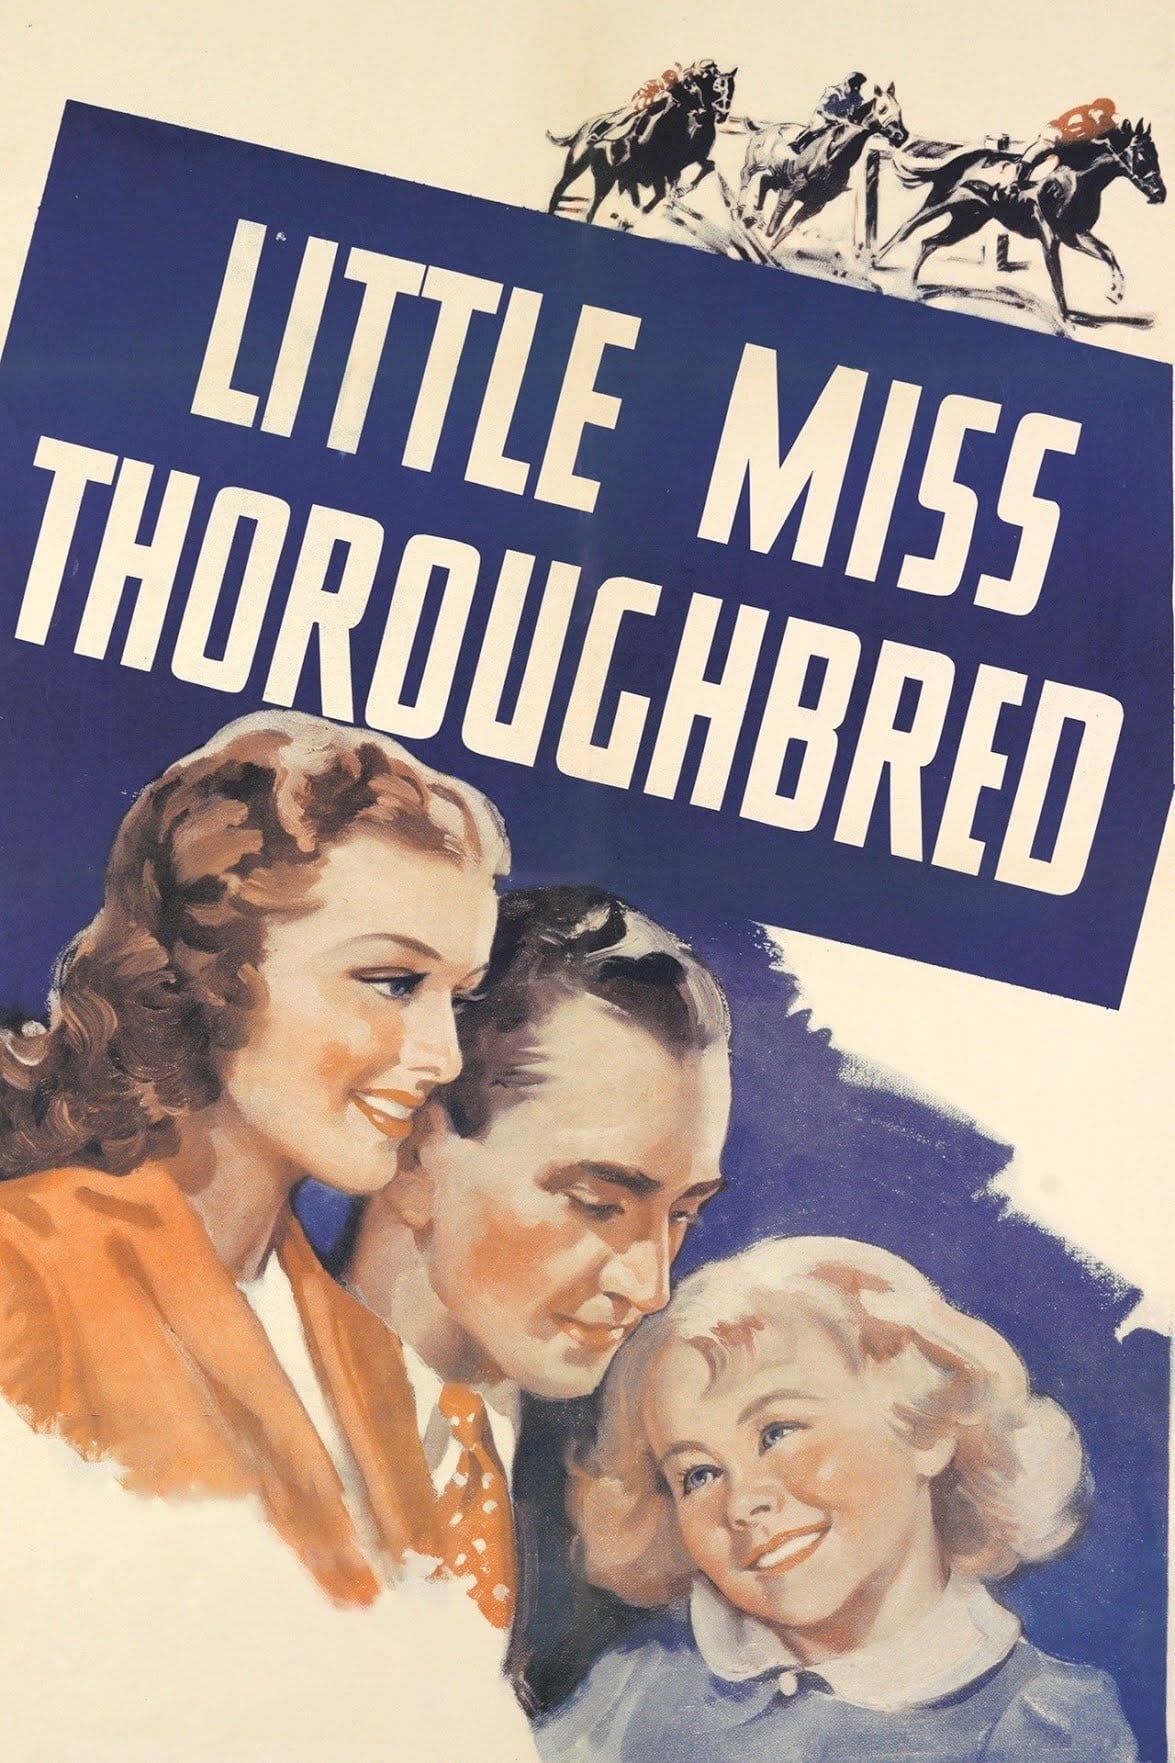 Little Miss Thoroughbred (1938)